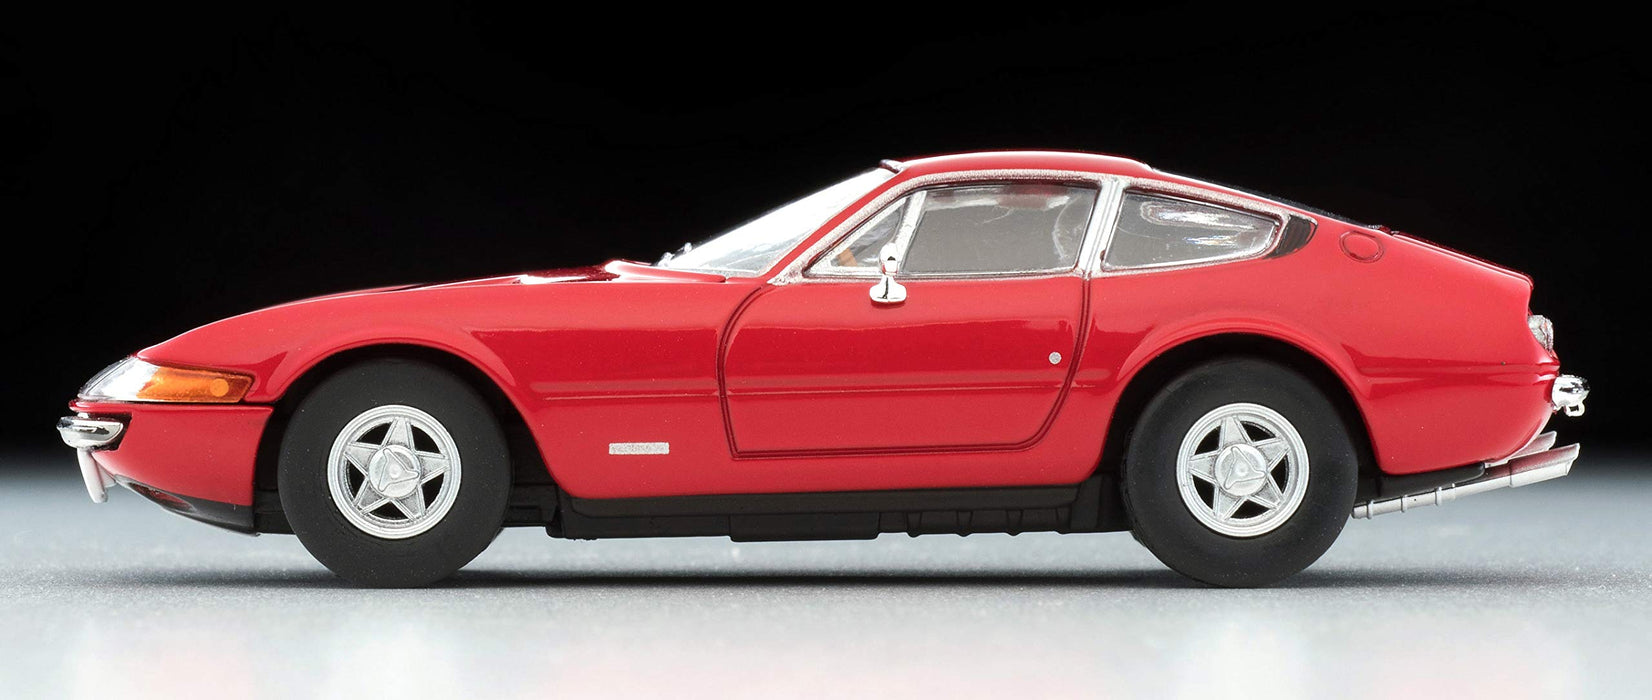 Tomytec Limited Vintage Ferrari 365 GTB4 Rouge Échelle 1/64 Produit fini